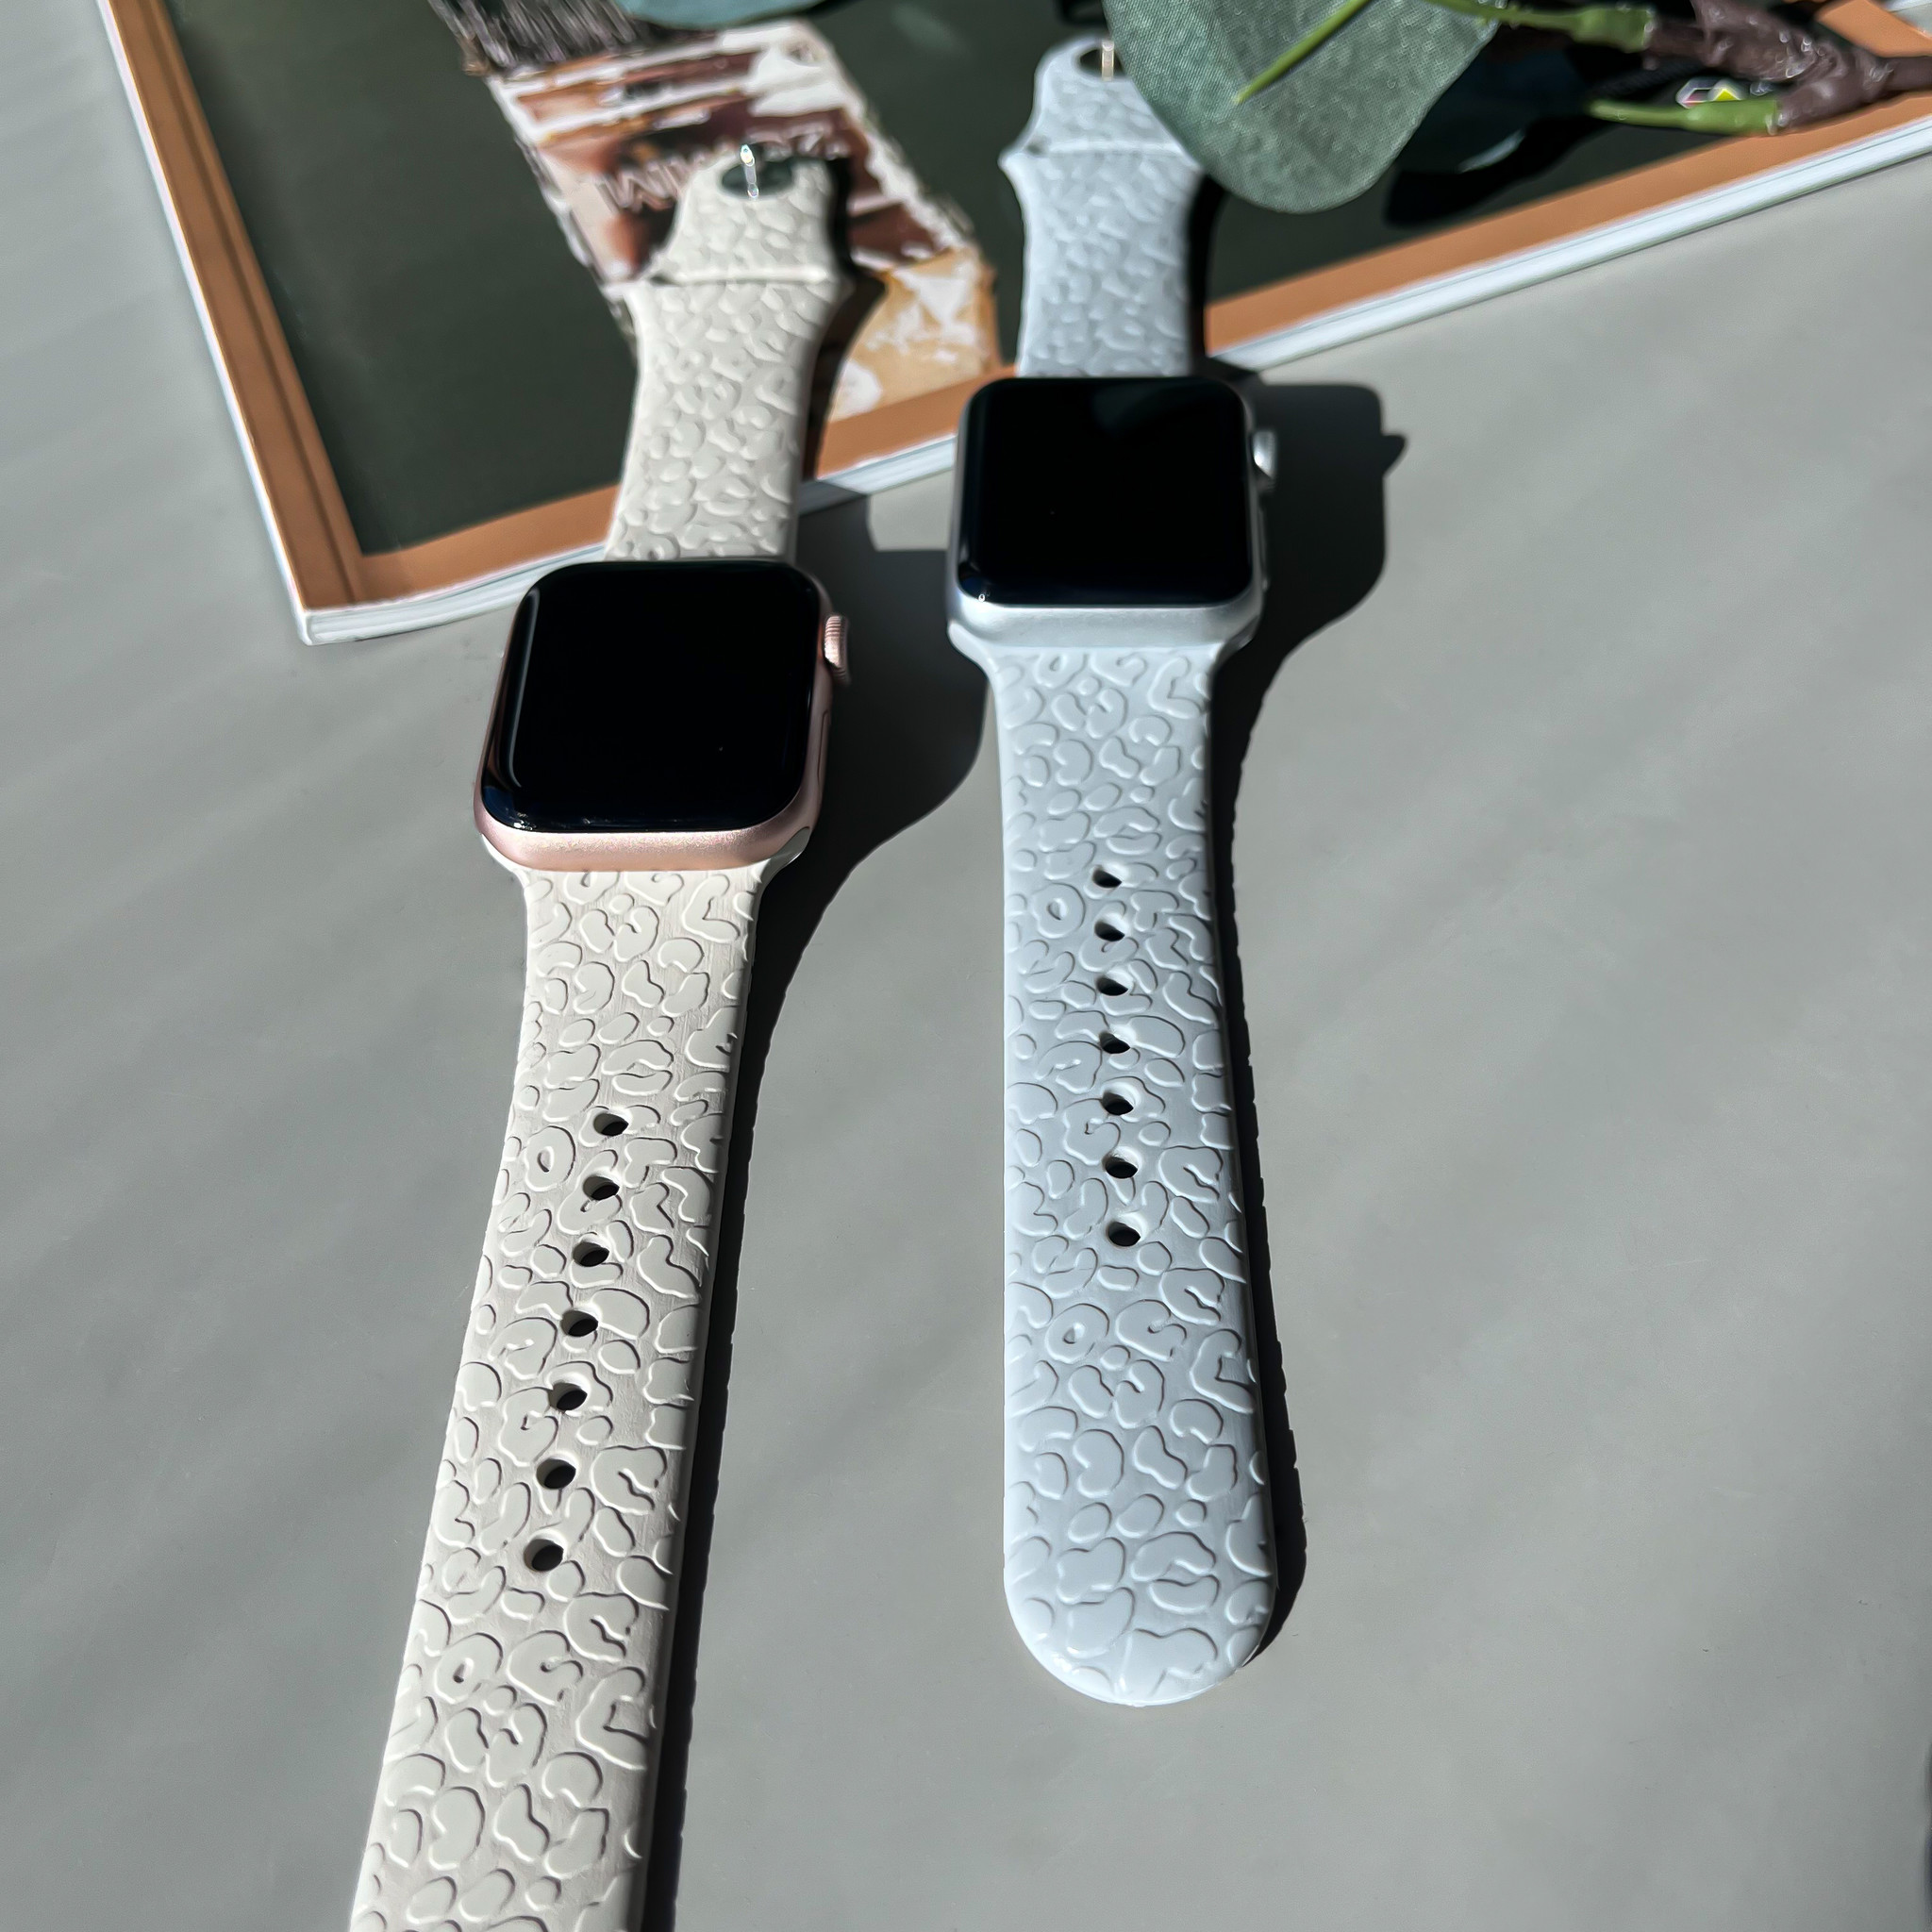 Apple Watch druck Sportarmband - Leopard Polarstern